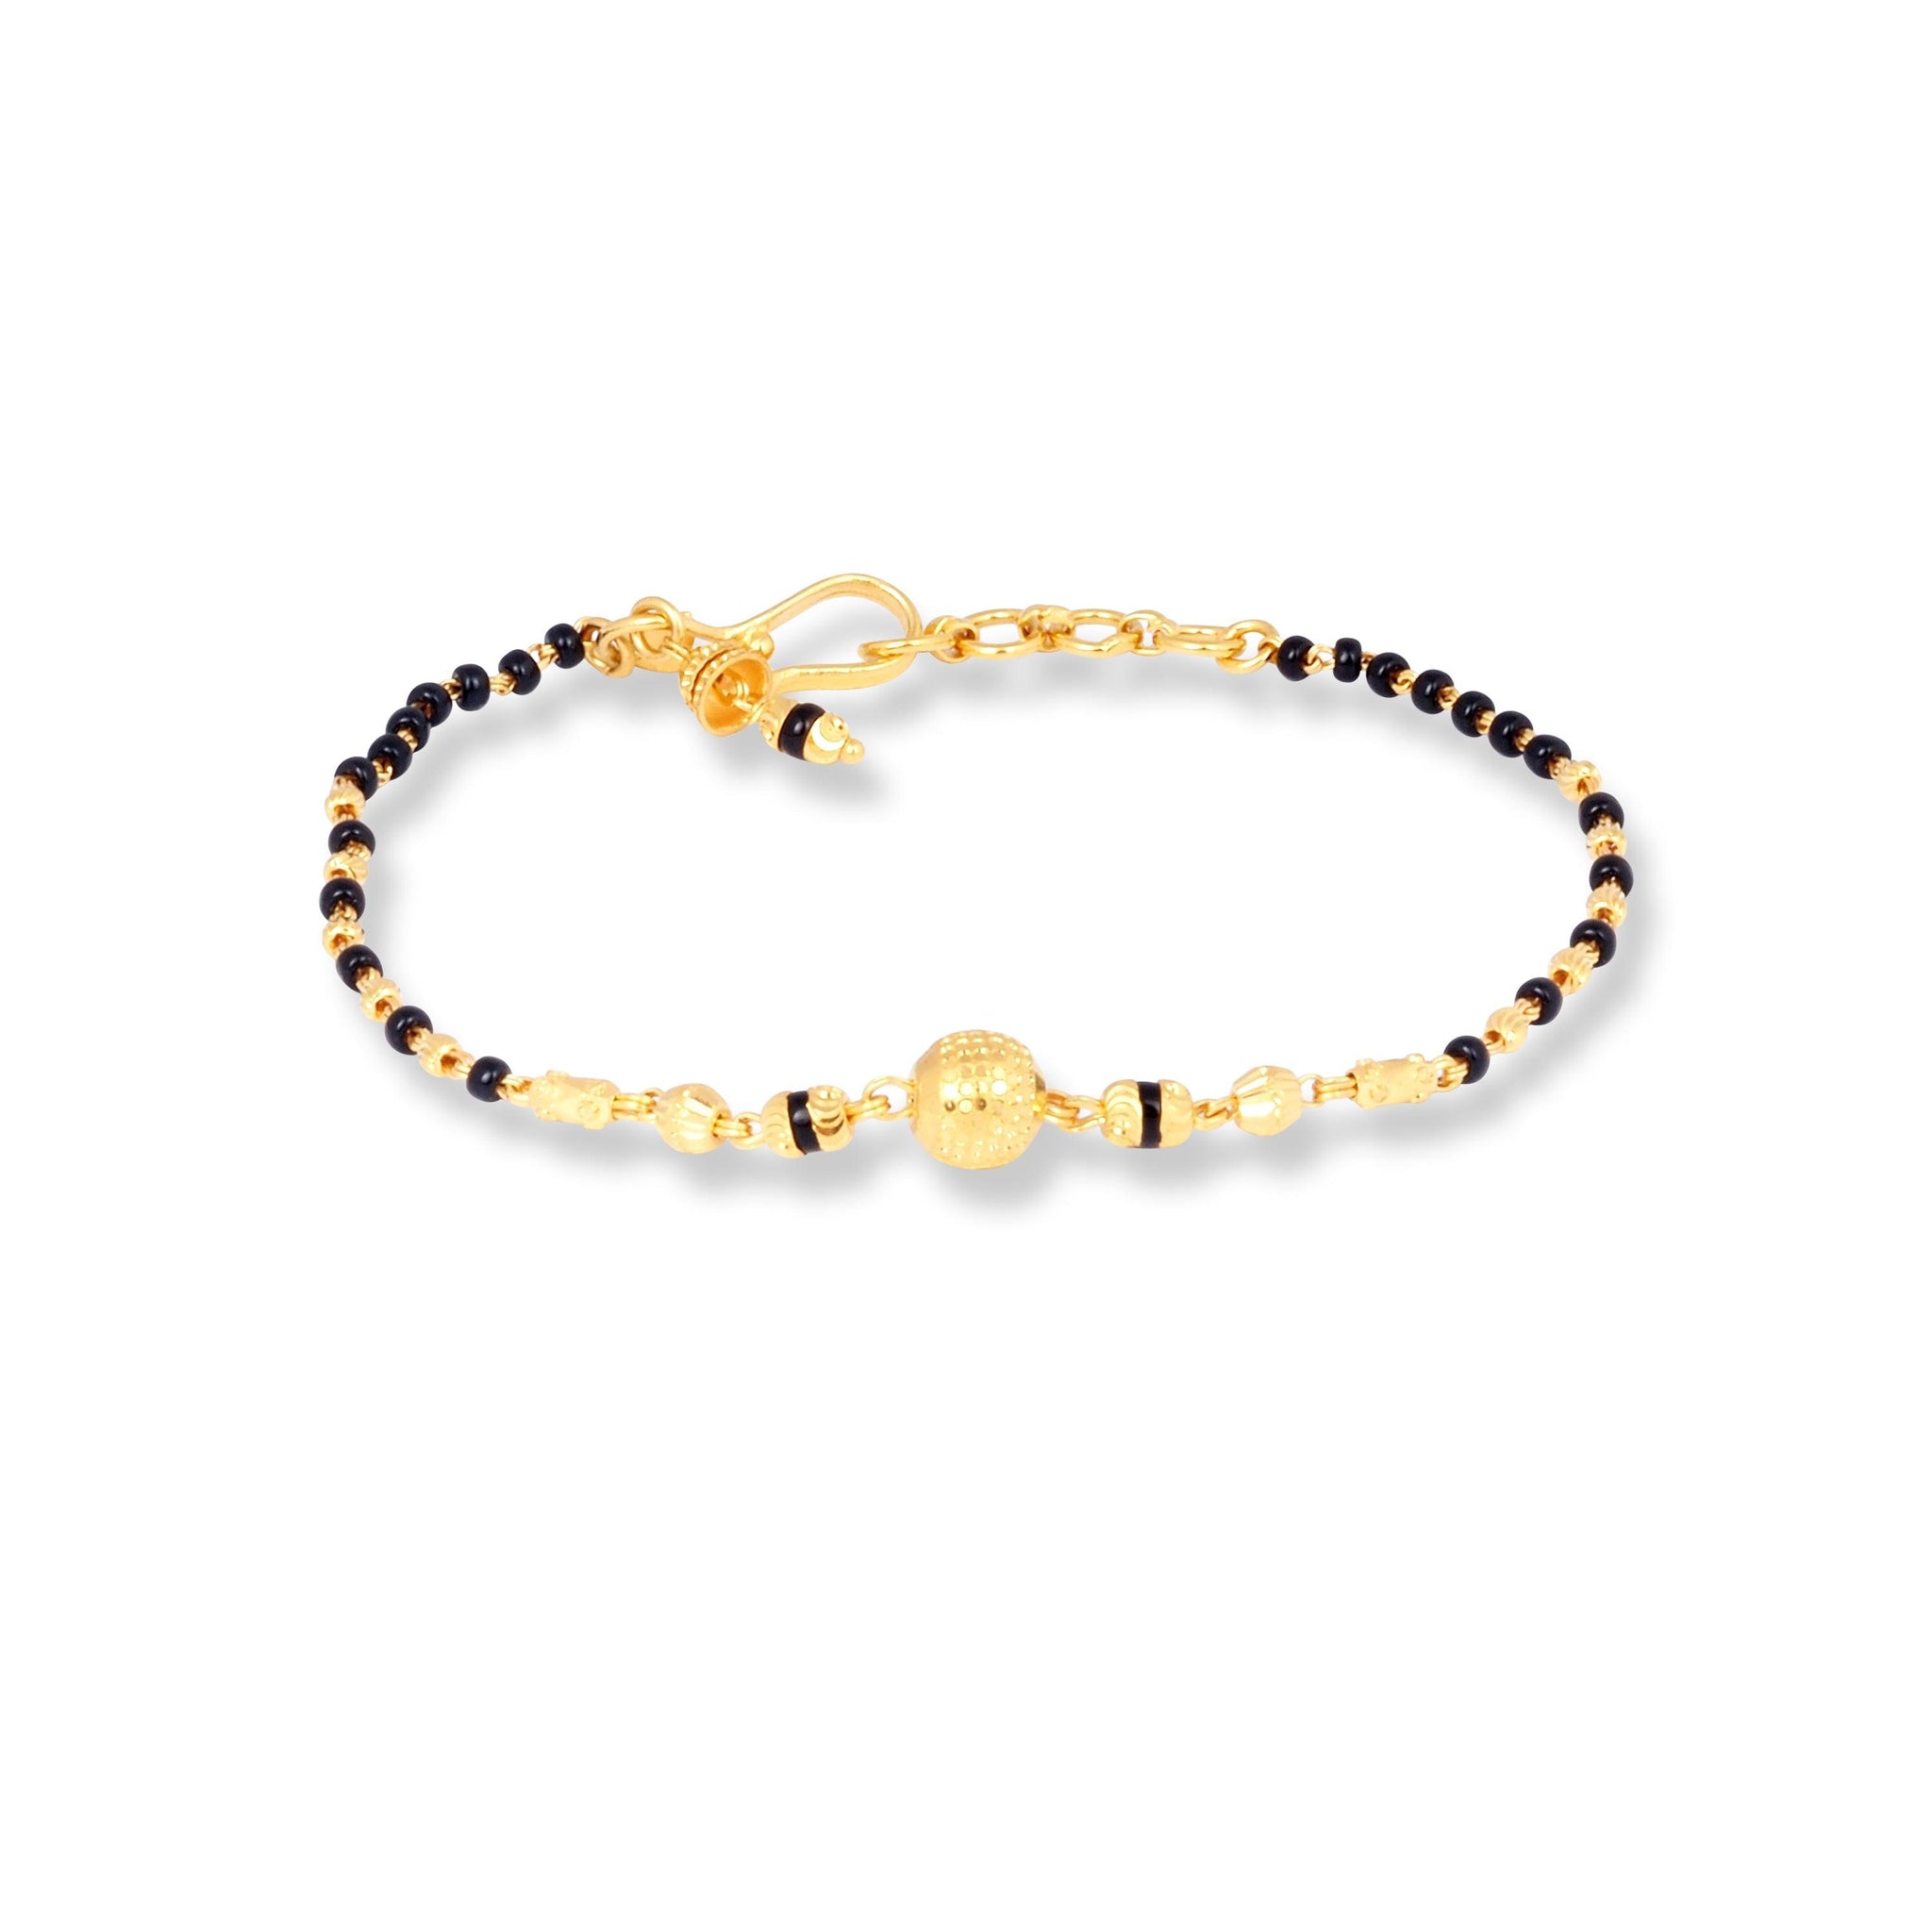 22ct Gold Ladies Bracelet with Hematite & Diamond Cutting Bead Design with U Hook Clasp (4.0g) LBR-7142